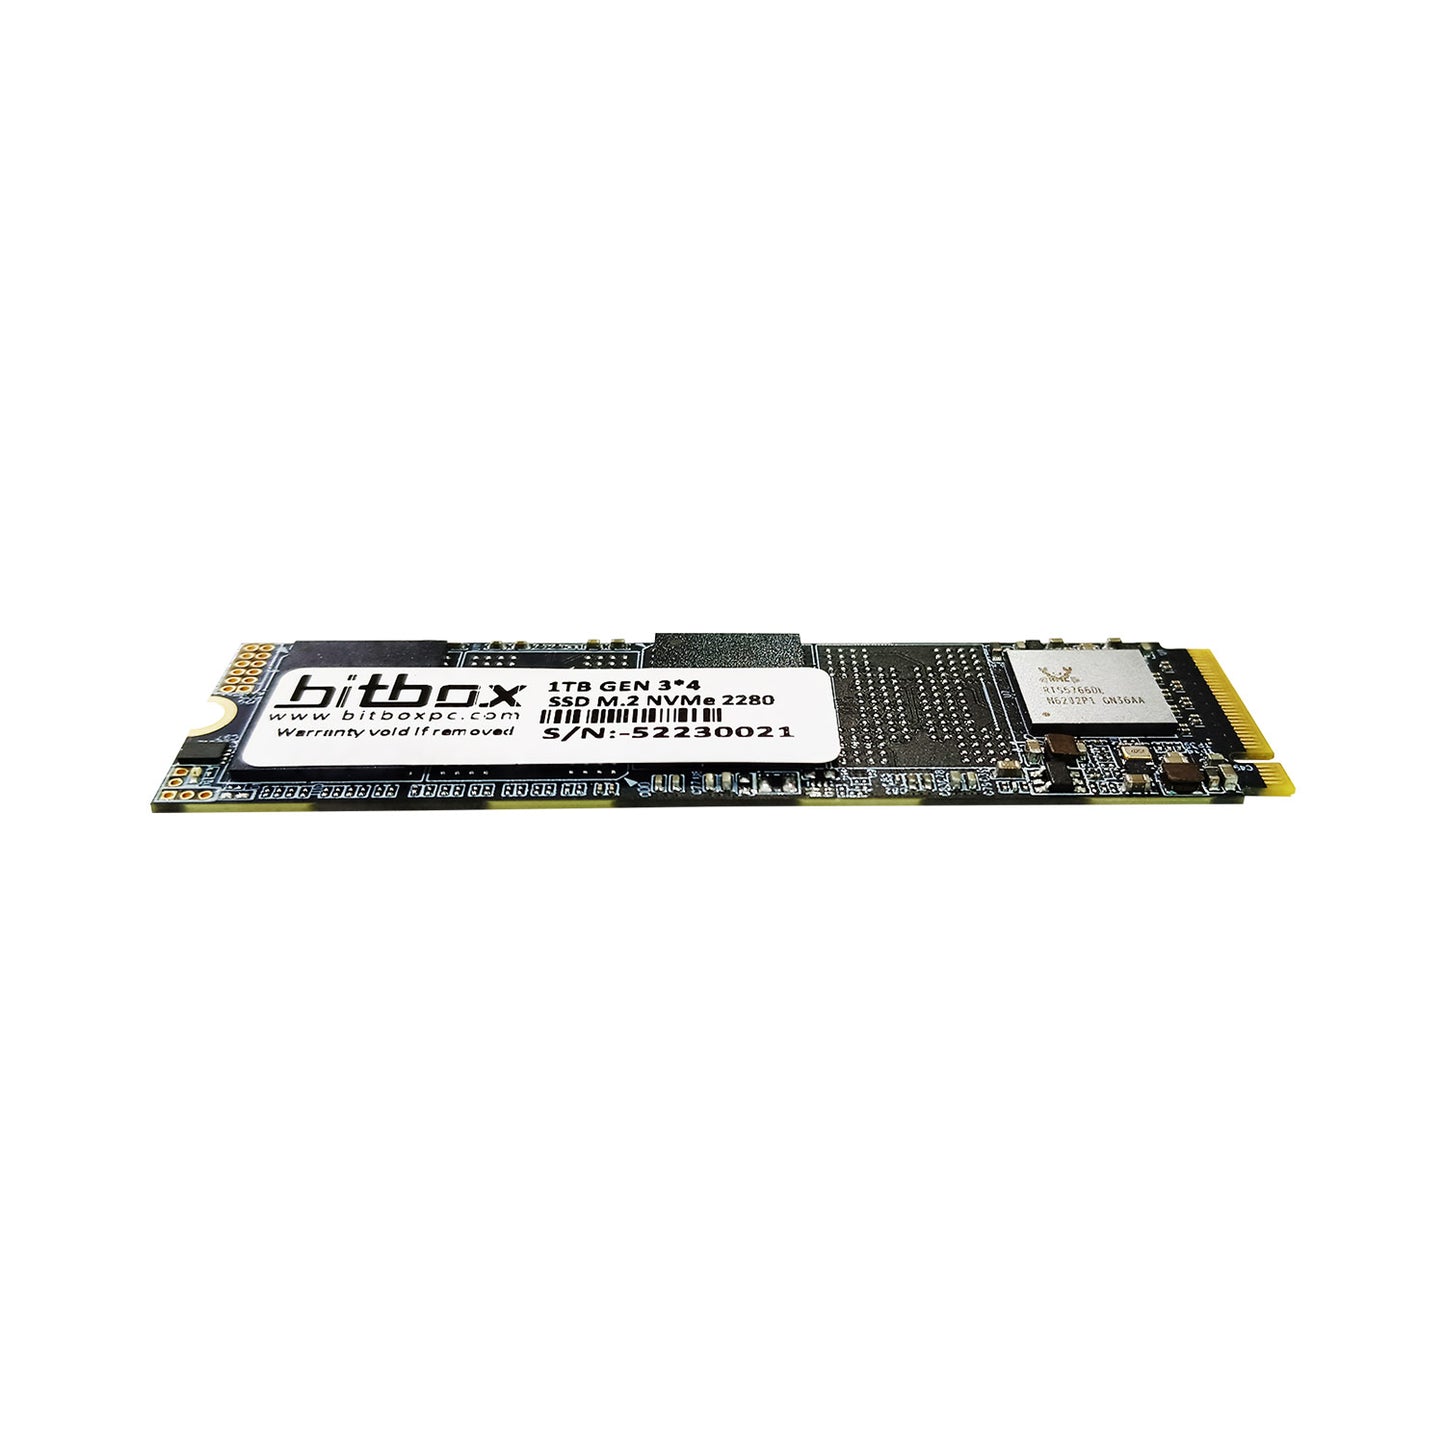 BitStor by BitBox 1TB SSD M.2 NVME 2280 PCI Express Gen3 & Gen4 for Laptop, Desktop